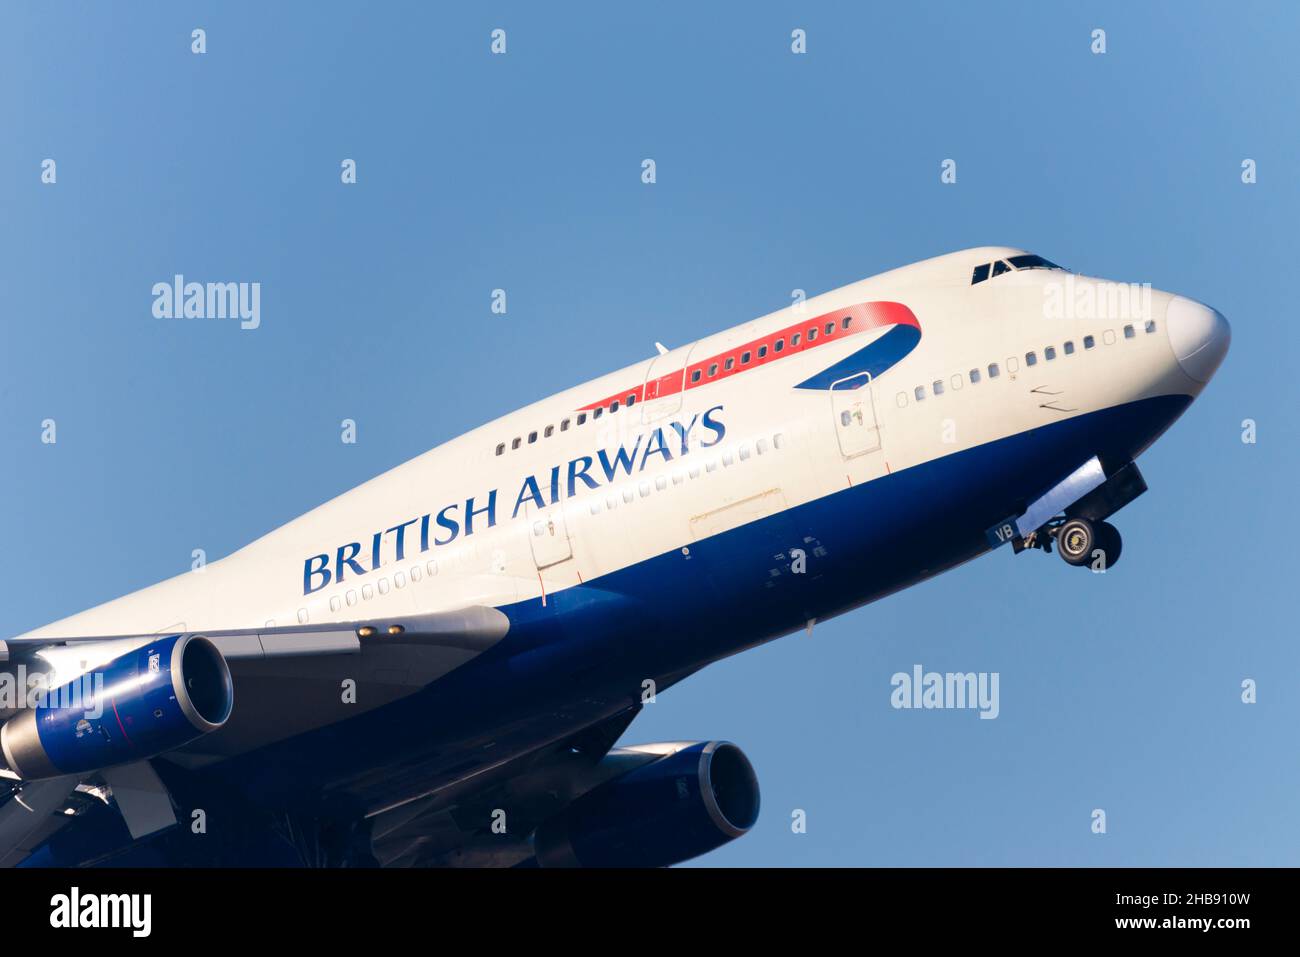 British Airways, BA Boeing 747 Jumbo jet airliner plane G-CIVB taking off from London Heathrow Airport, London, UK, in blue sky. Nose leg retracting Stock Photo